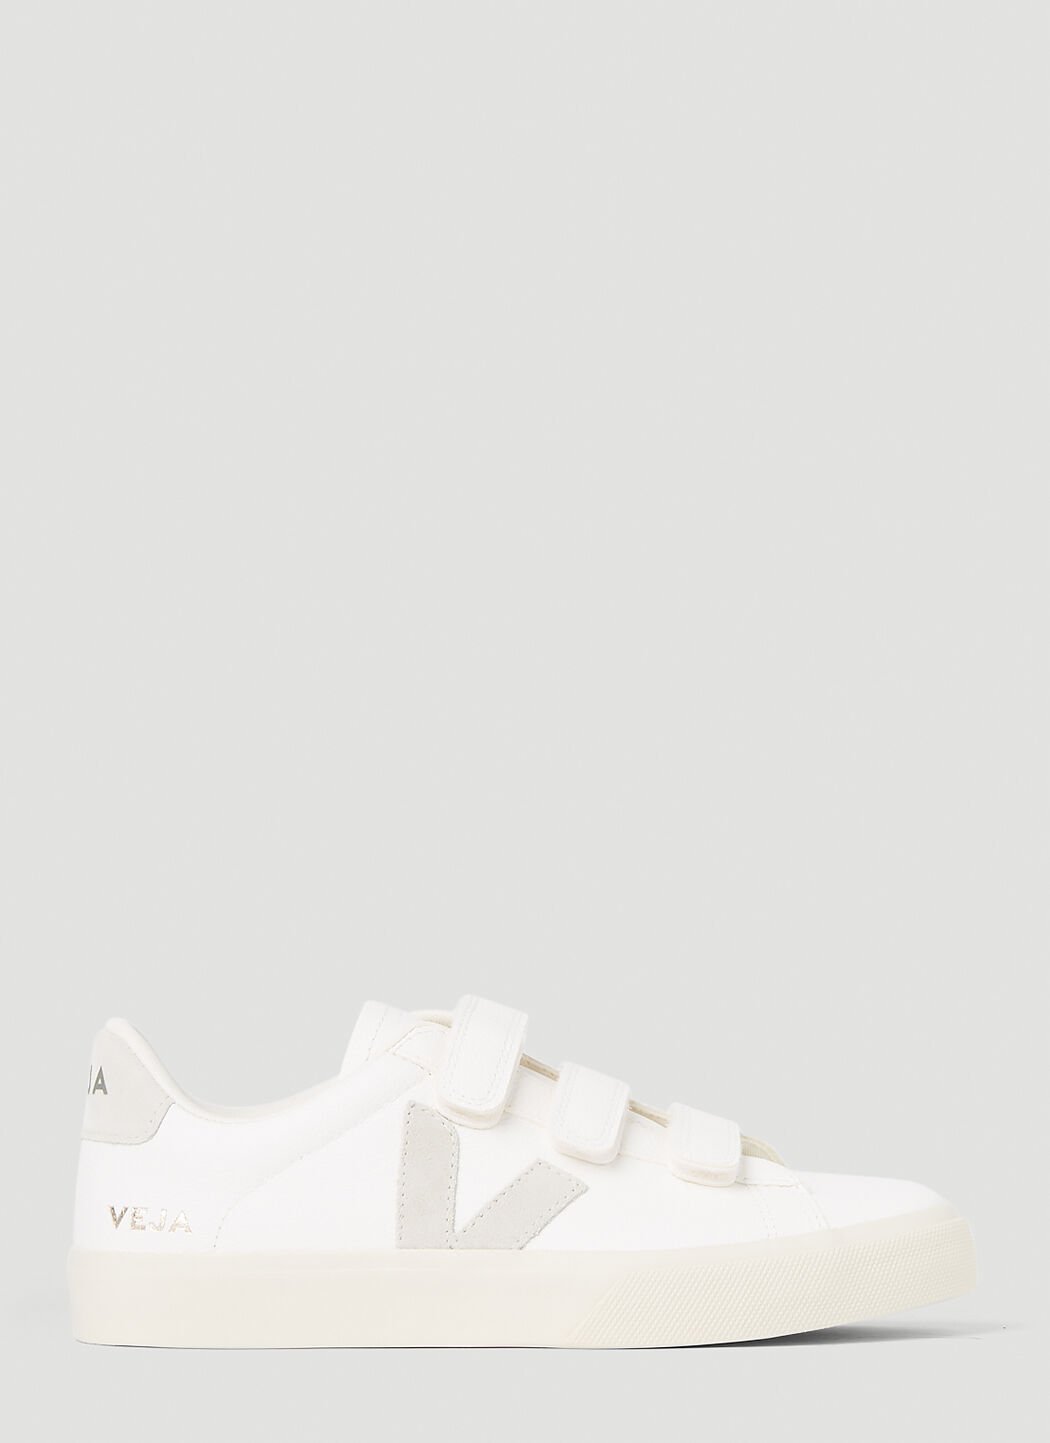 Veja Recife Leather Sneakers White vej0356032